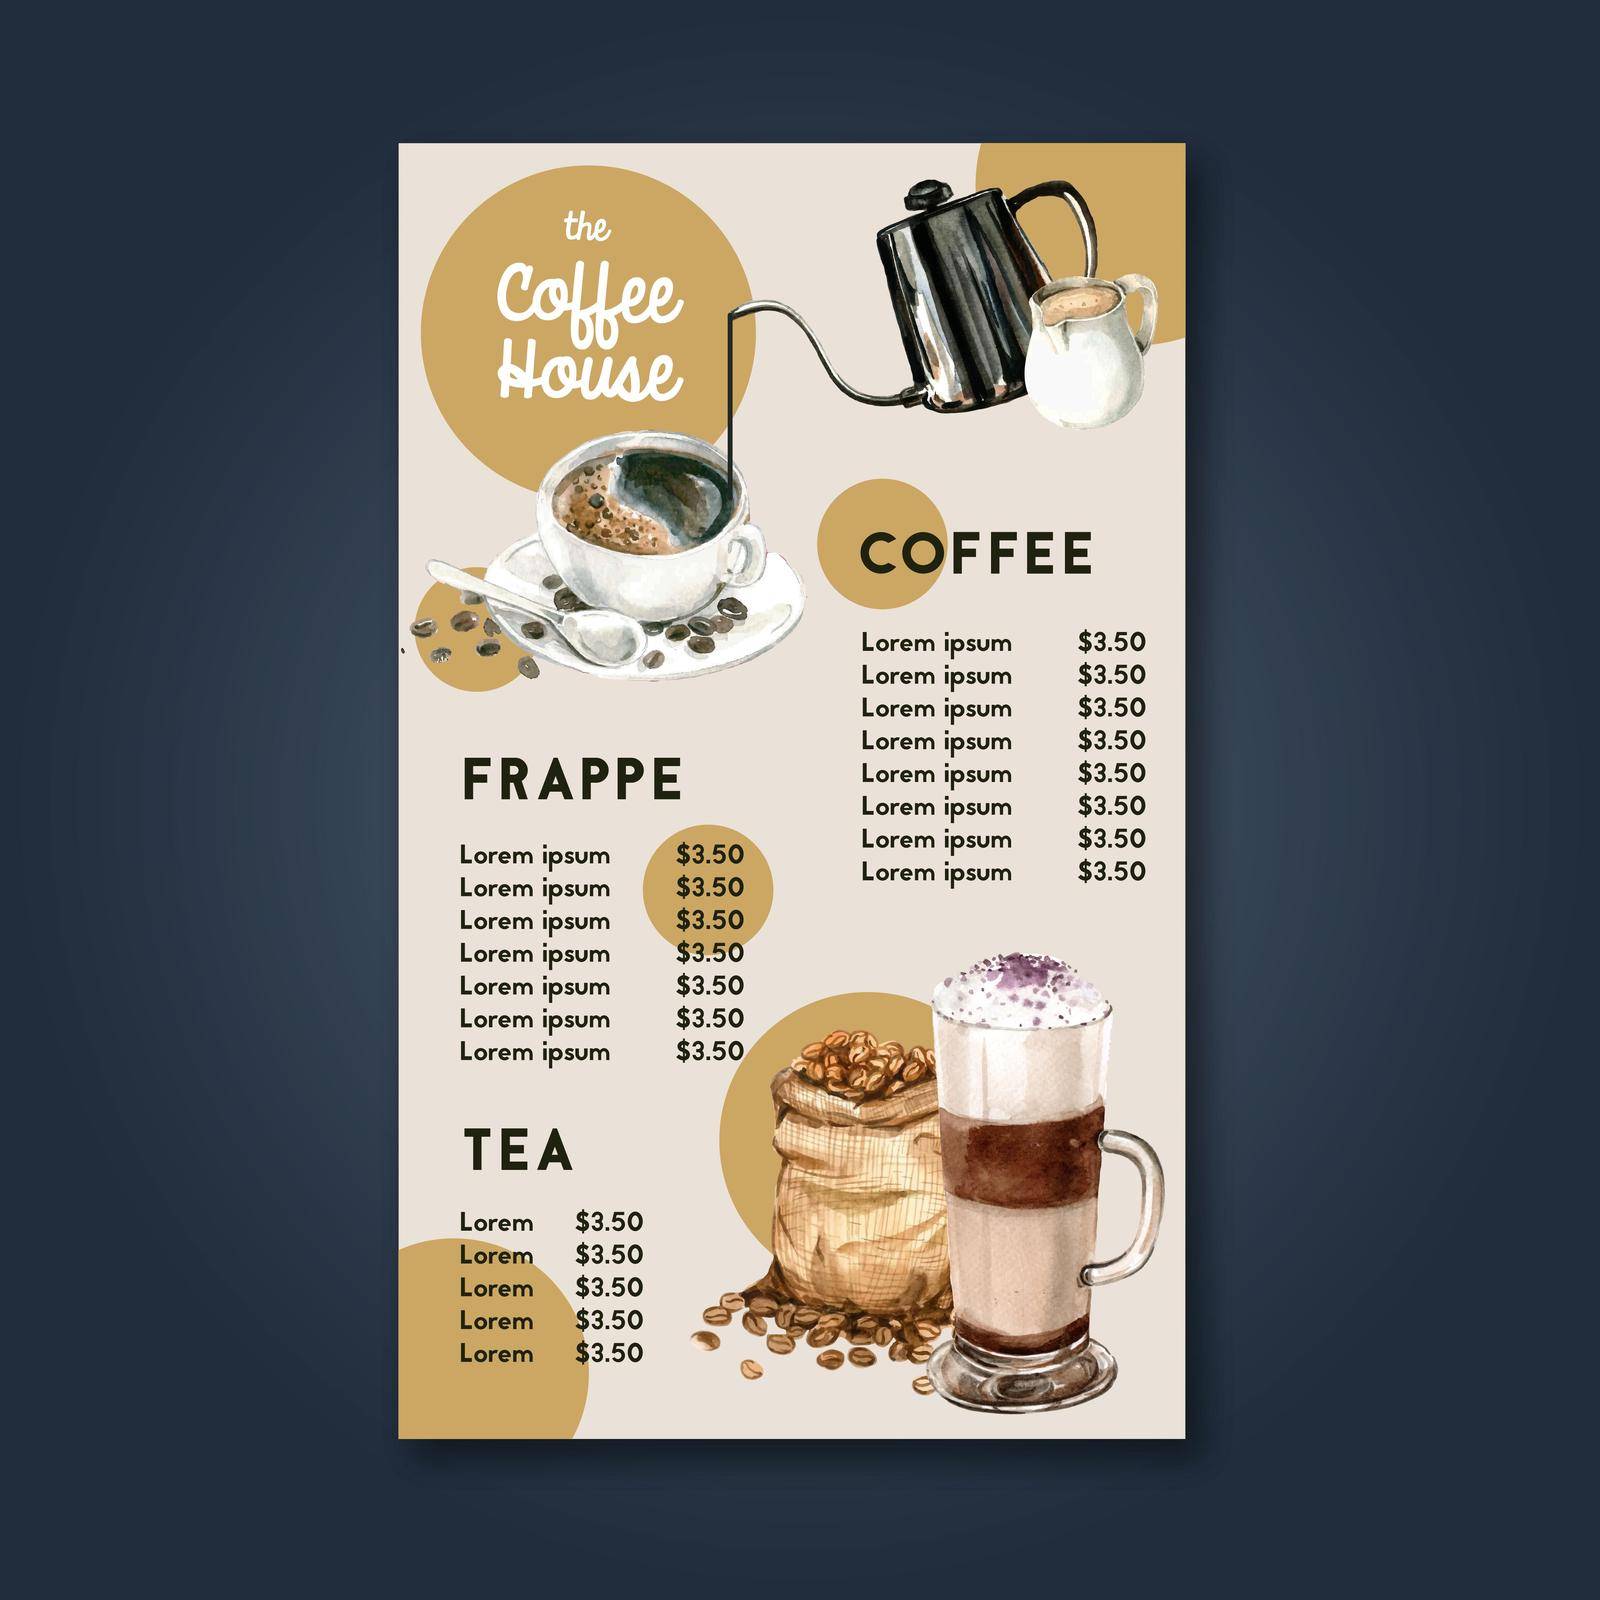 coffee house menu americano, cappuccino, espresso menu, infographic design, watercolor illustration by Photographeeasia